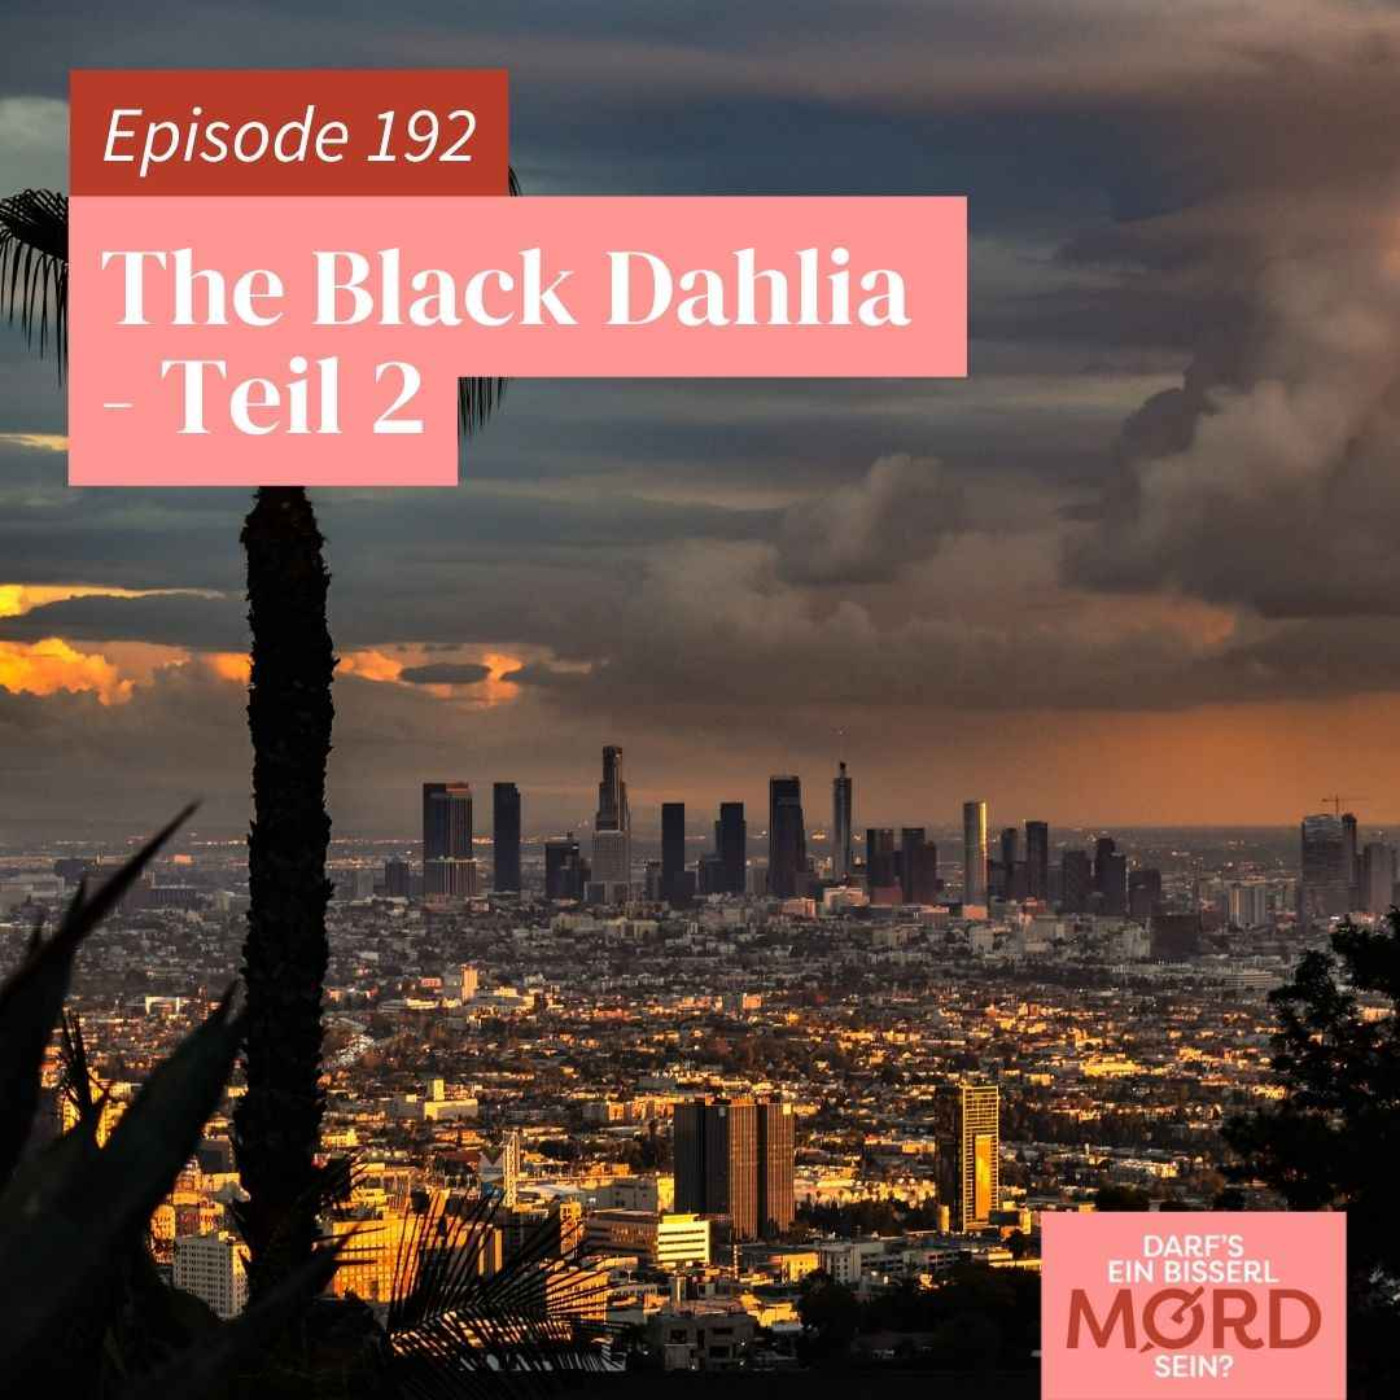 Episode 192: The Black Dahlia (2/2)